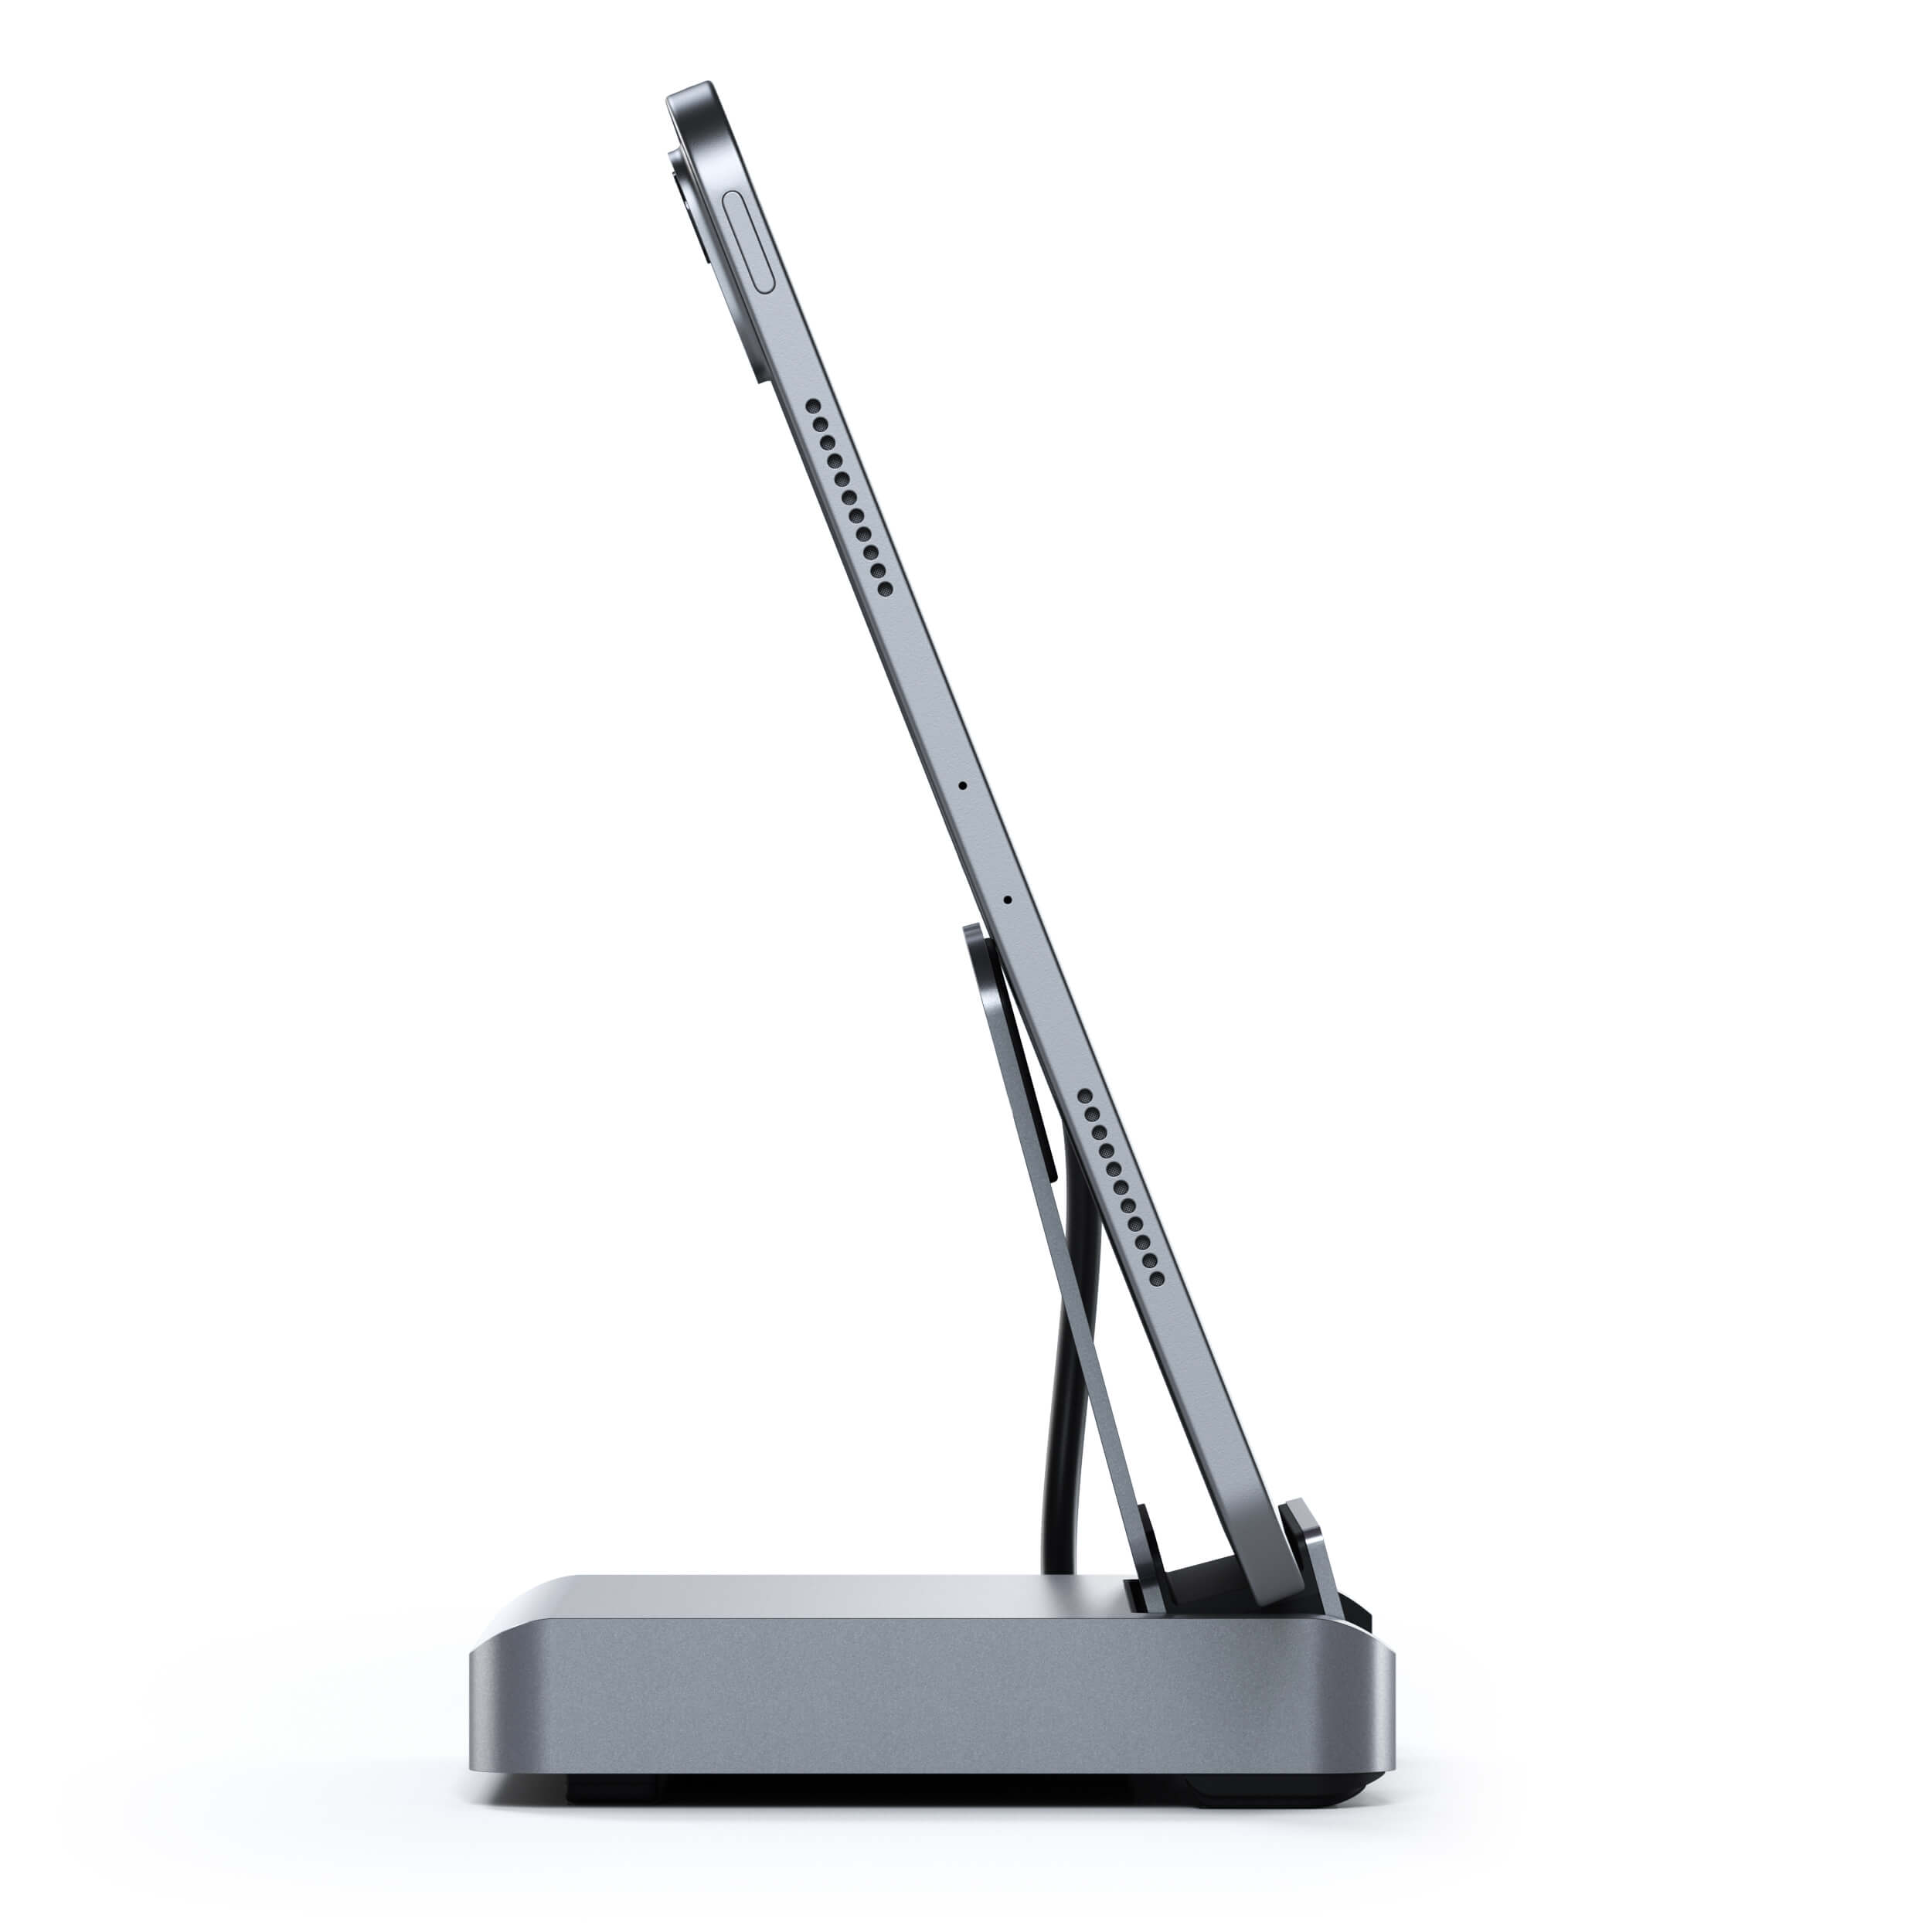 Satechi Aluminum Stand Hub for iPad Pro space gray 02 • techboys.de • smart tech, auf den Punkt!